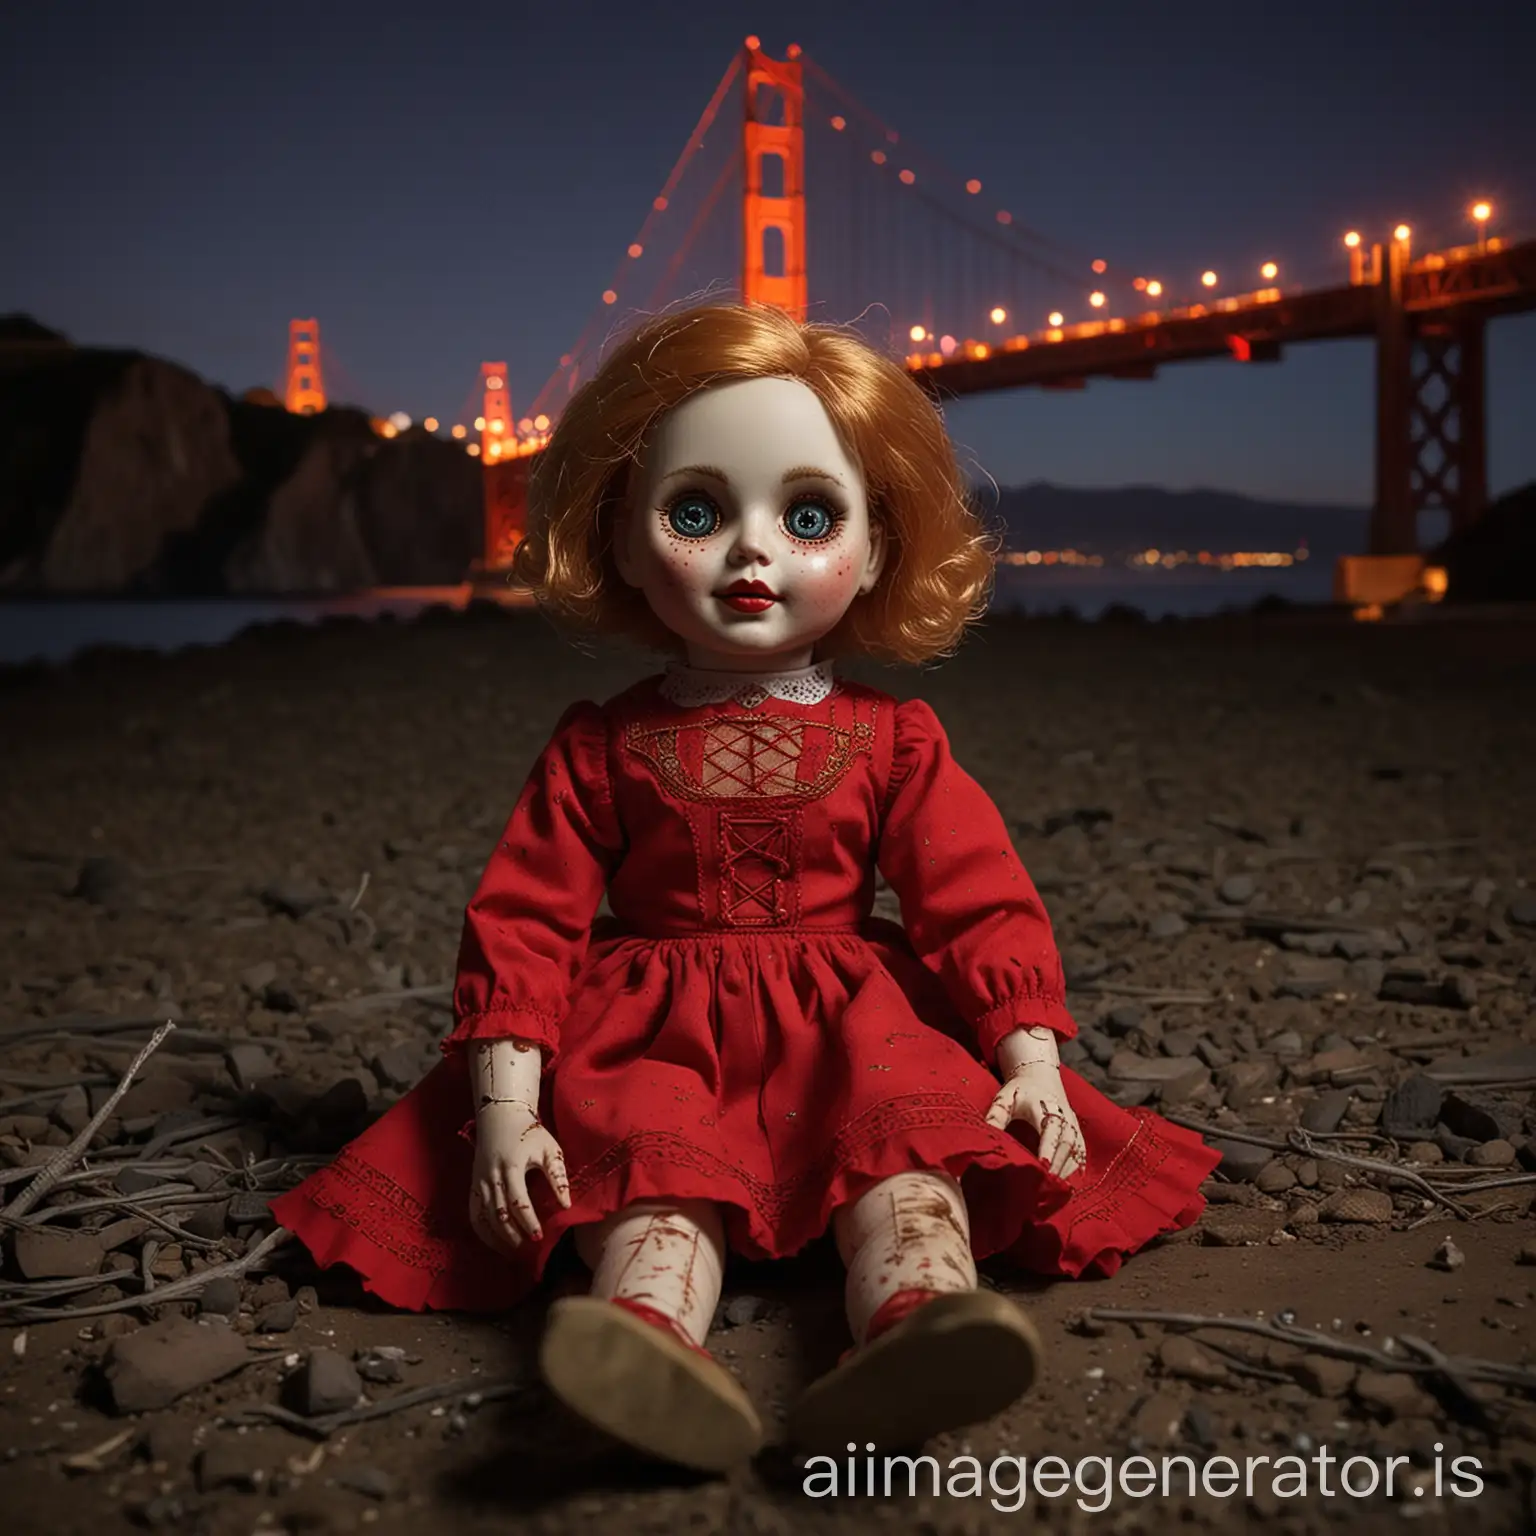 Creepy-Doll-Portrait-with-Golden-Gate-Bridge-at-Night